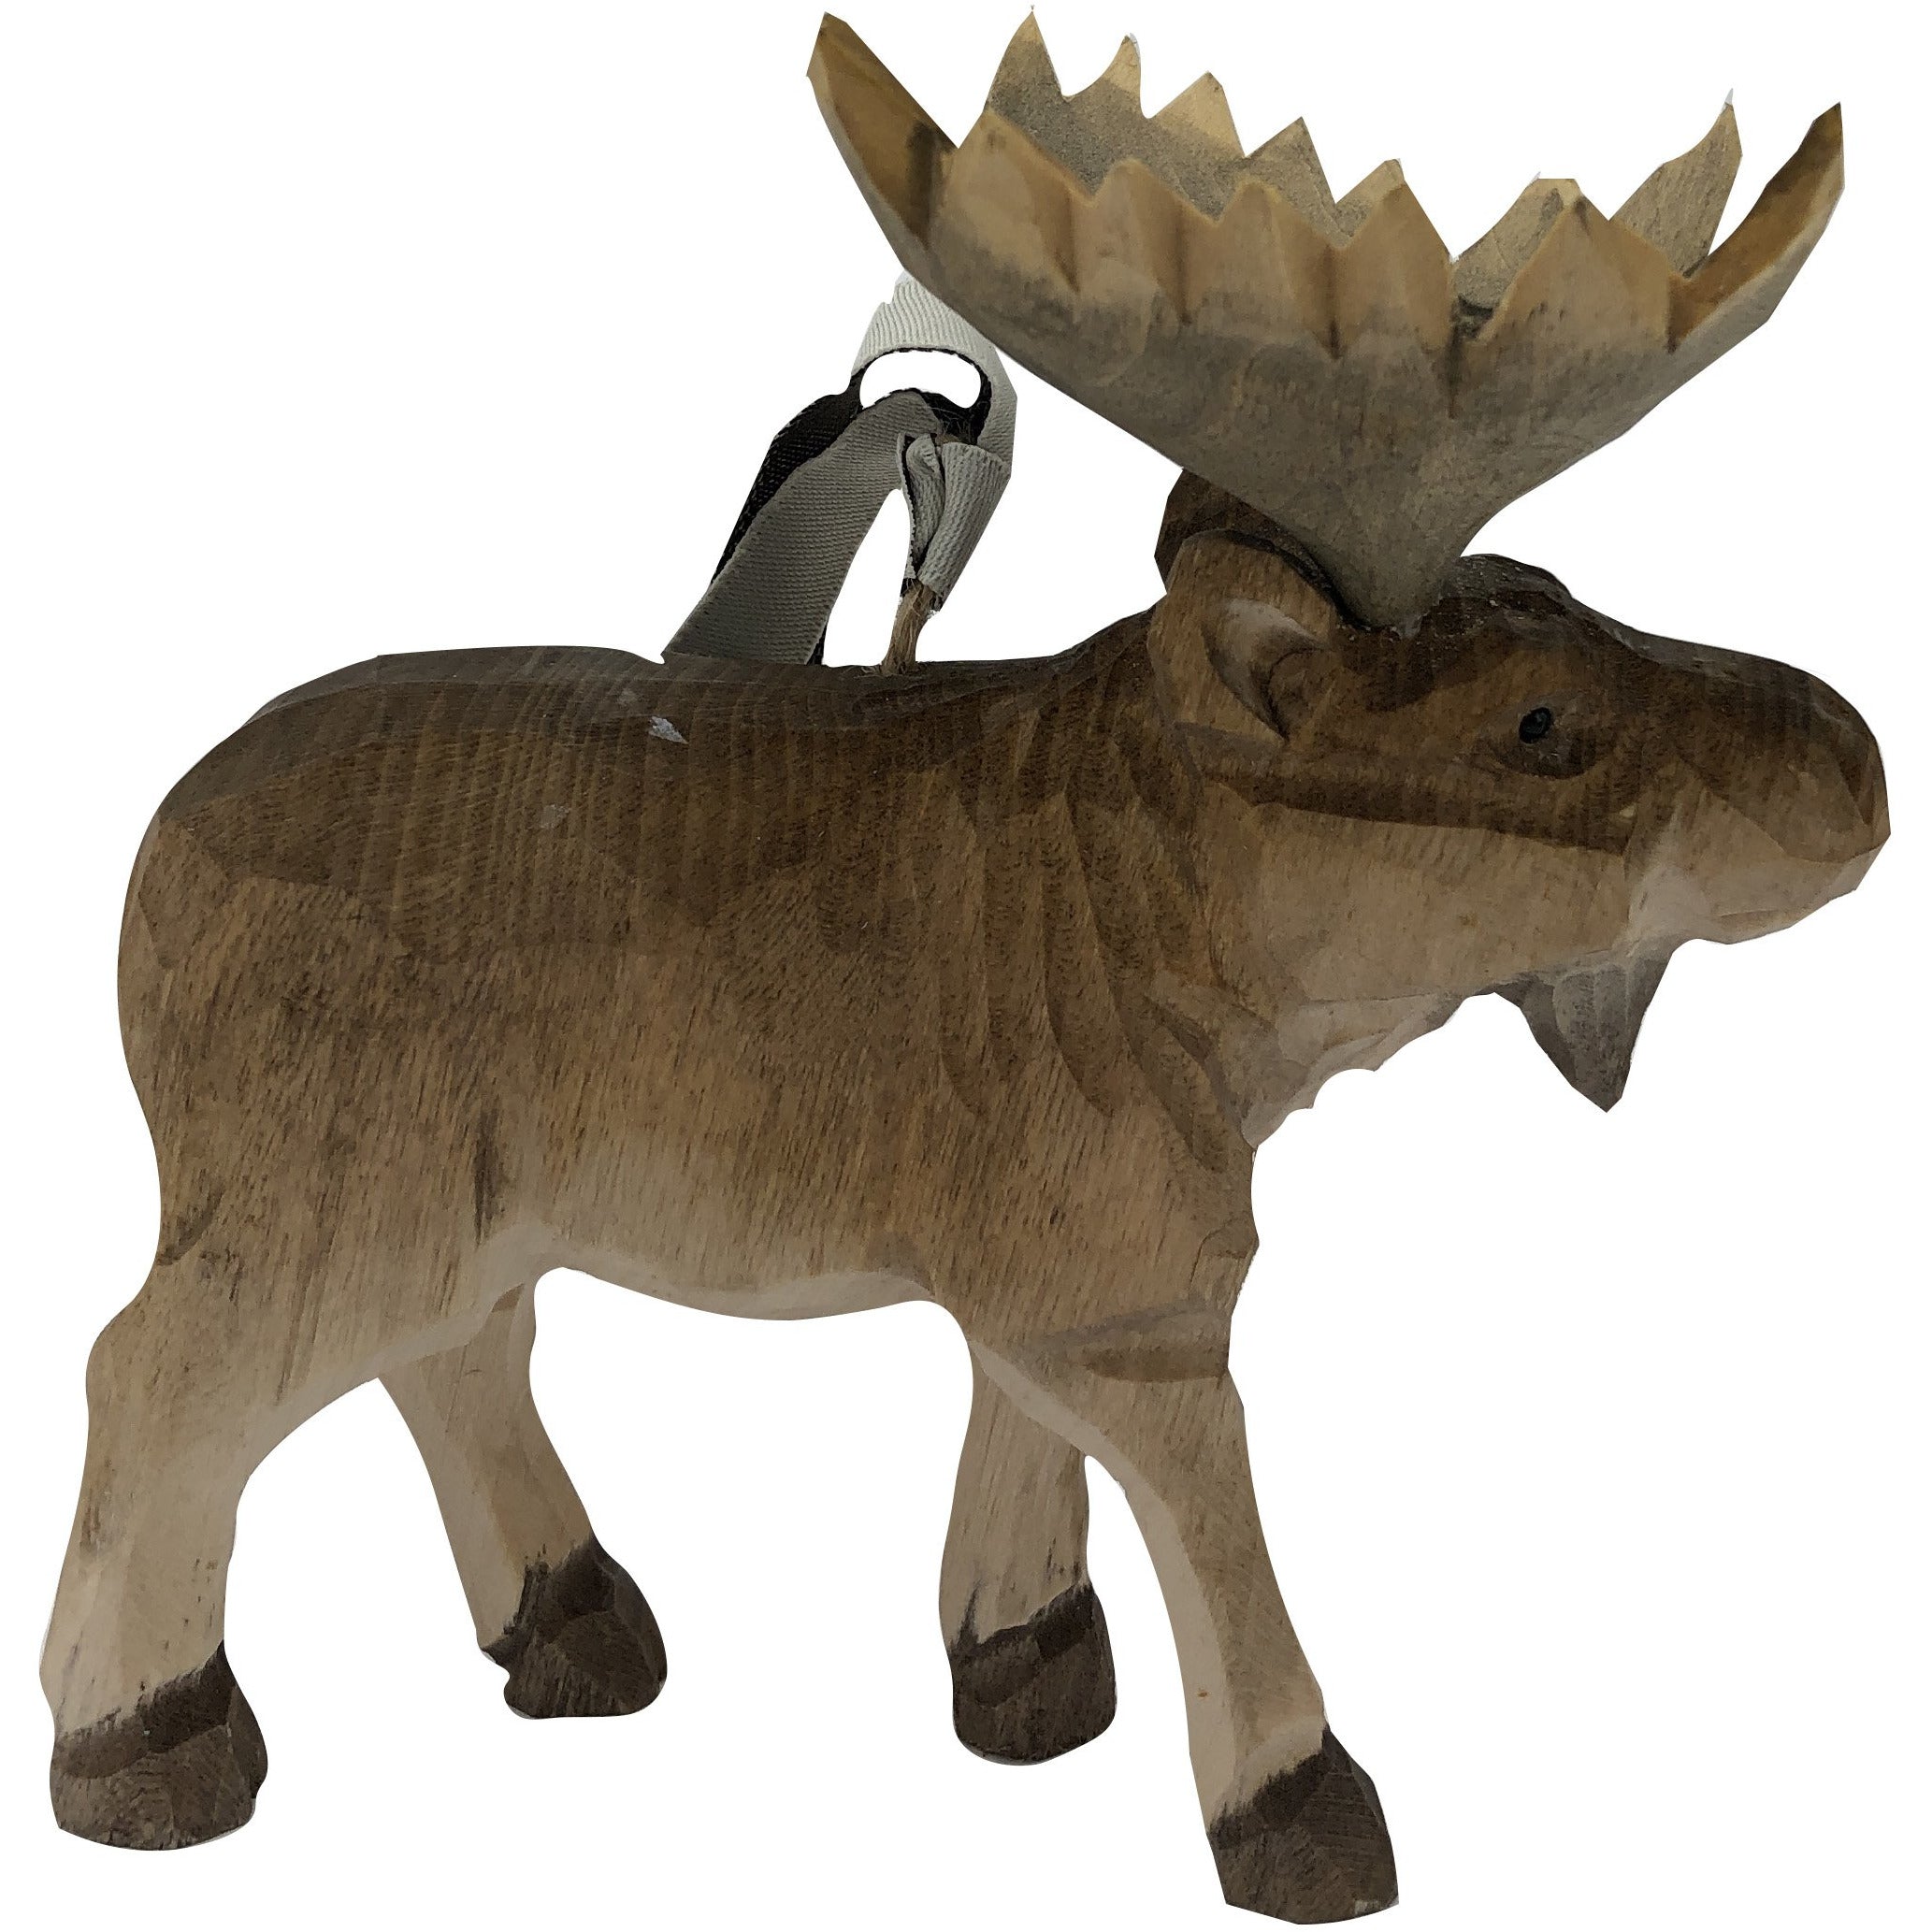 Art Studio Handmade Wood Christmas Ornaments / Wooden / Hand Carved / Assorted Northern Animals / Moose / Elk / Brown Bear / Black Bear